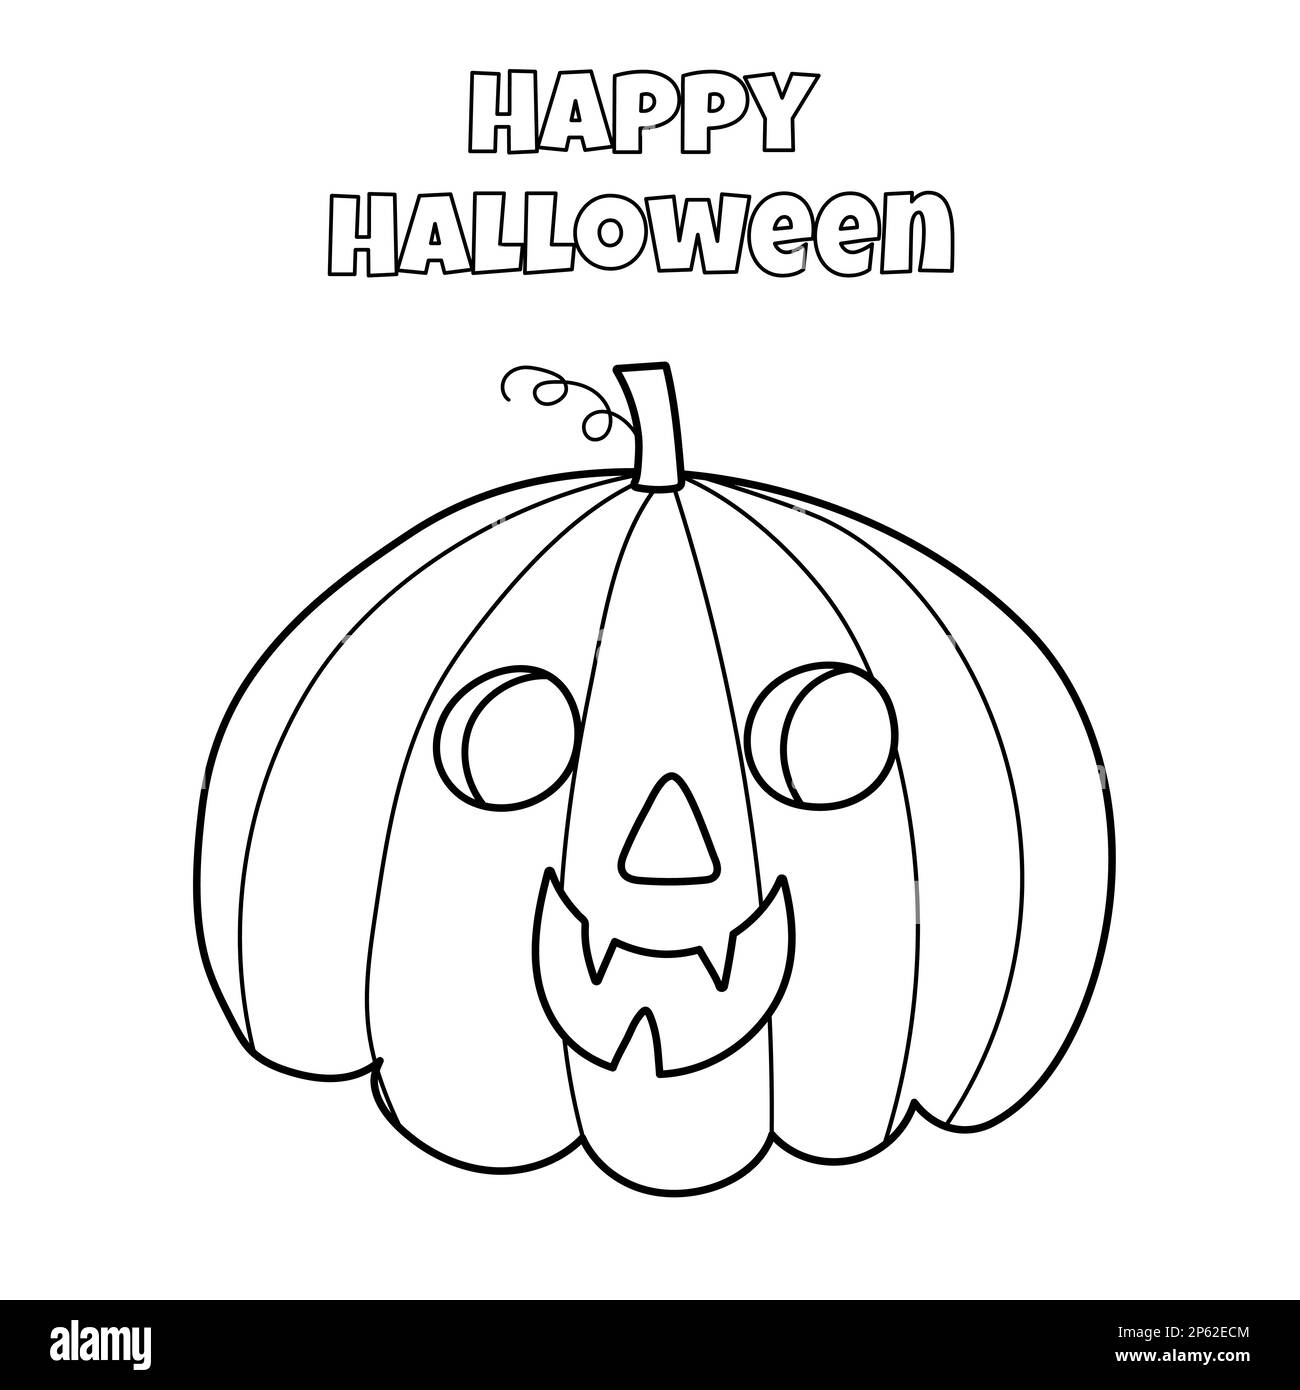 Spooky pumpkin coloring page for kids hi